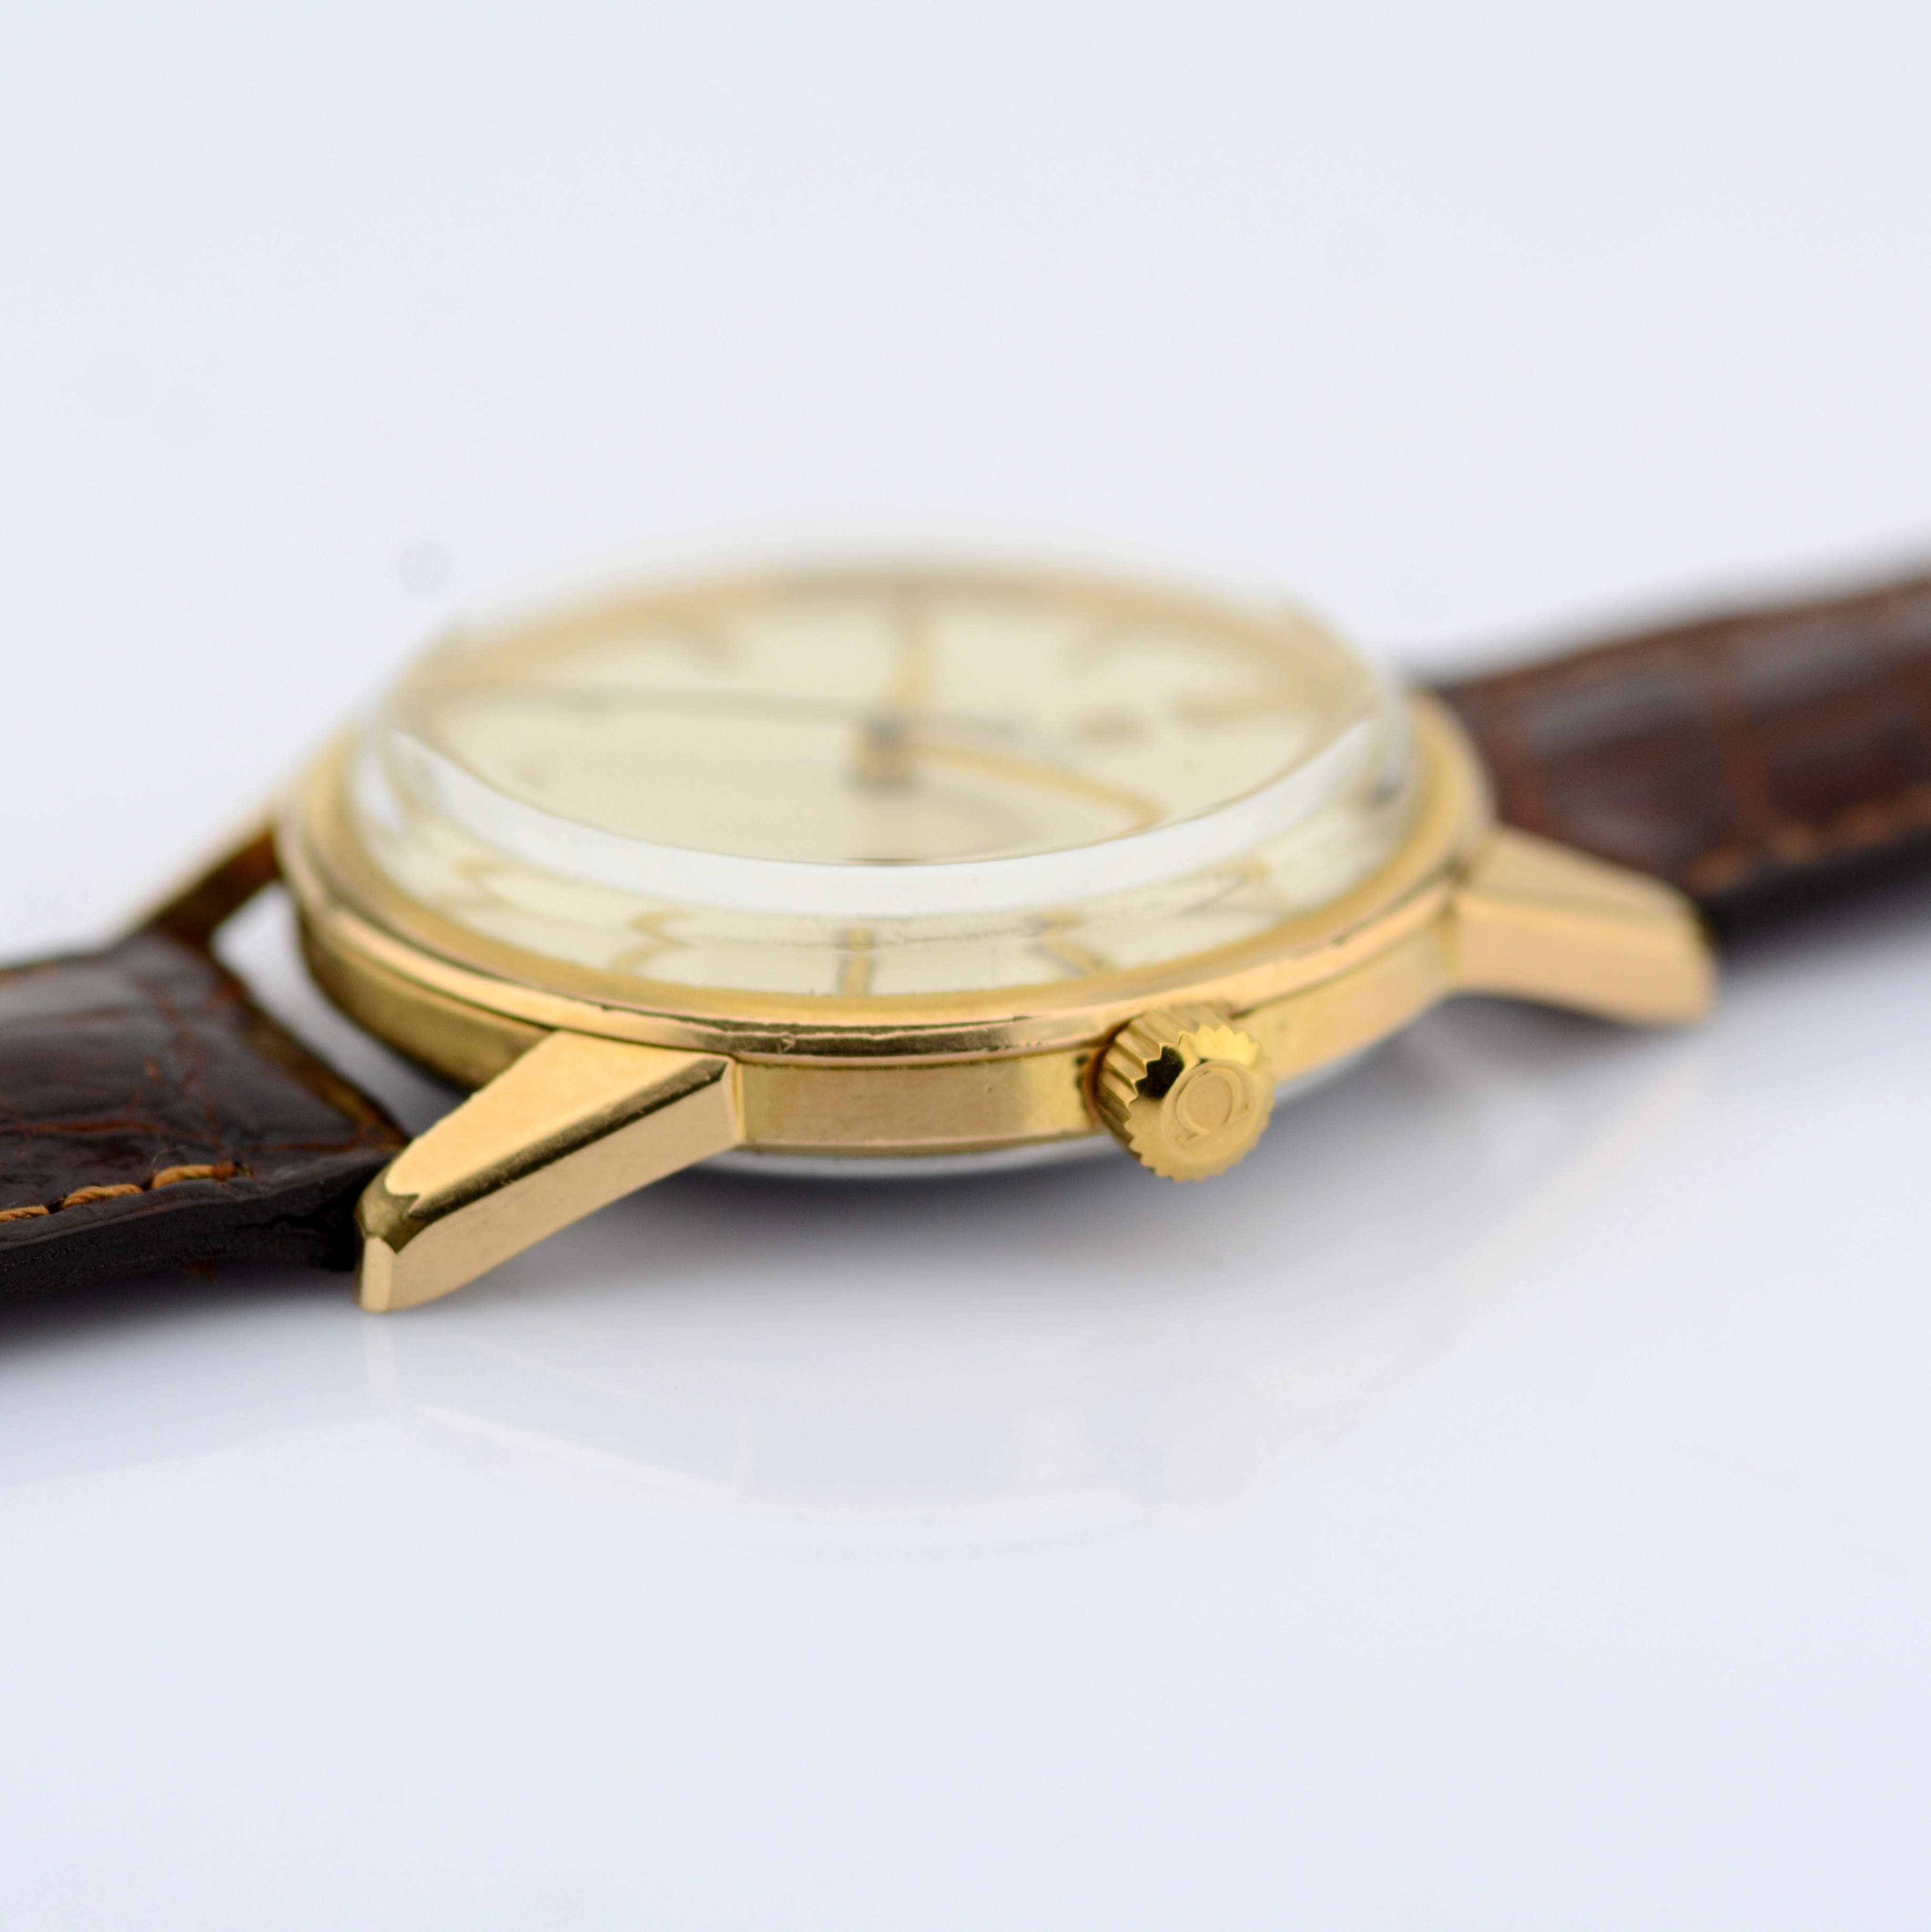 Omega / Vintage Automatic - Gentlmen's Gold/Steel Wrist Watch - Image 6 of 8